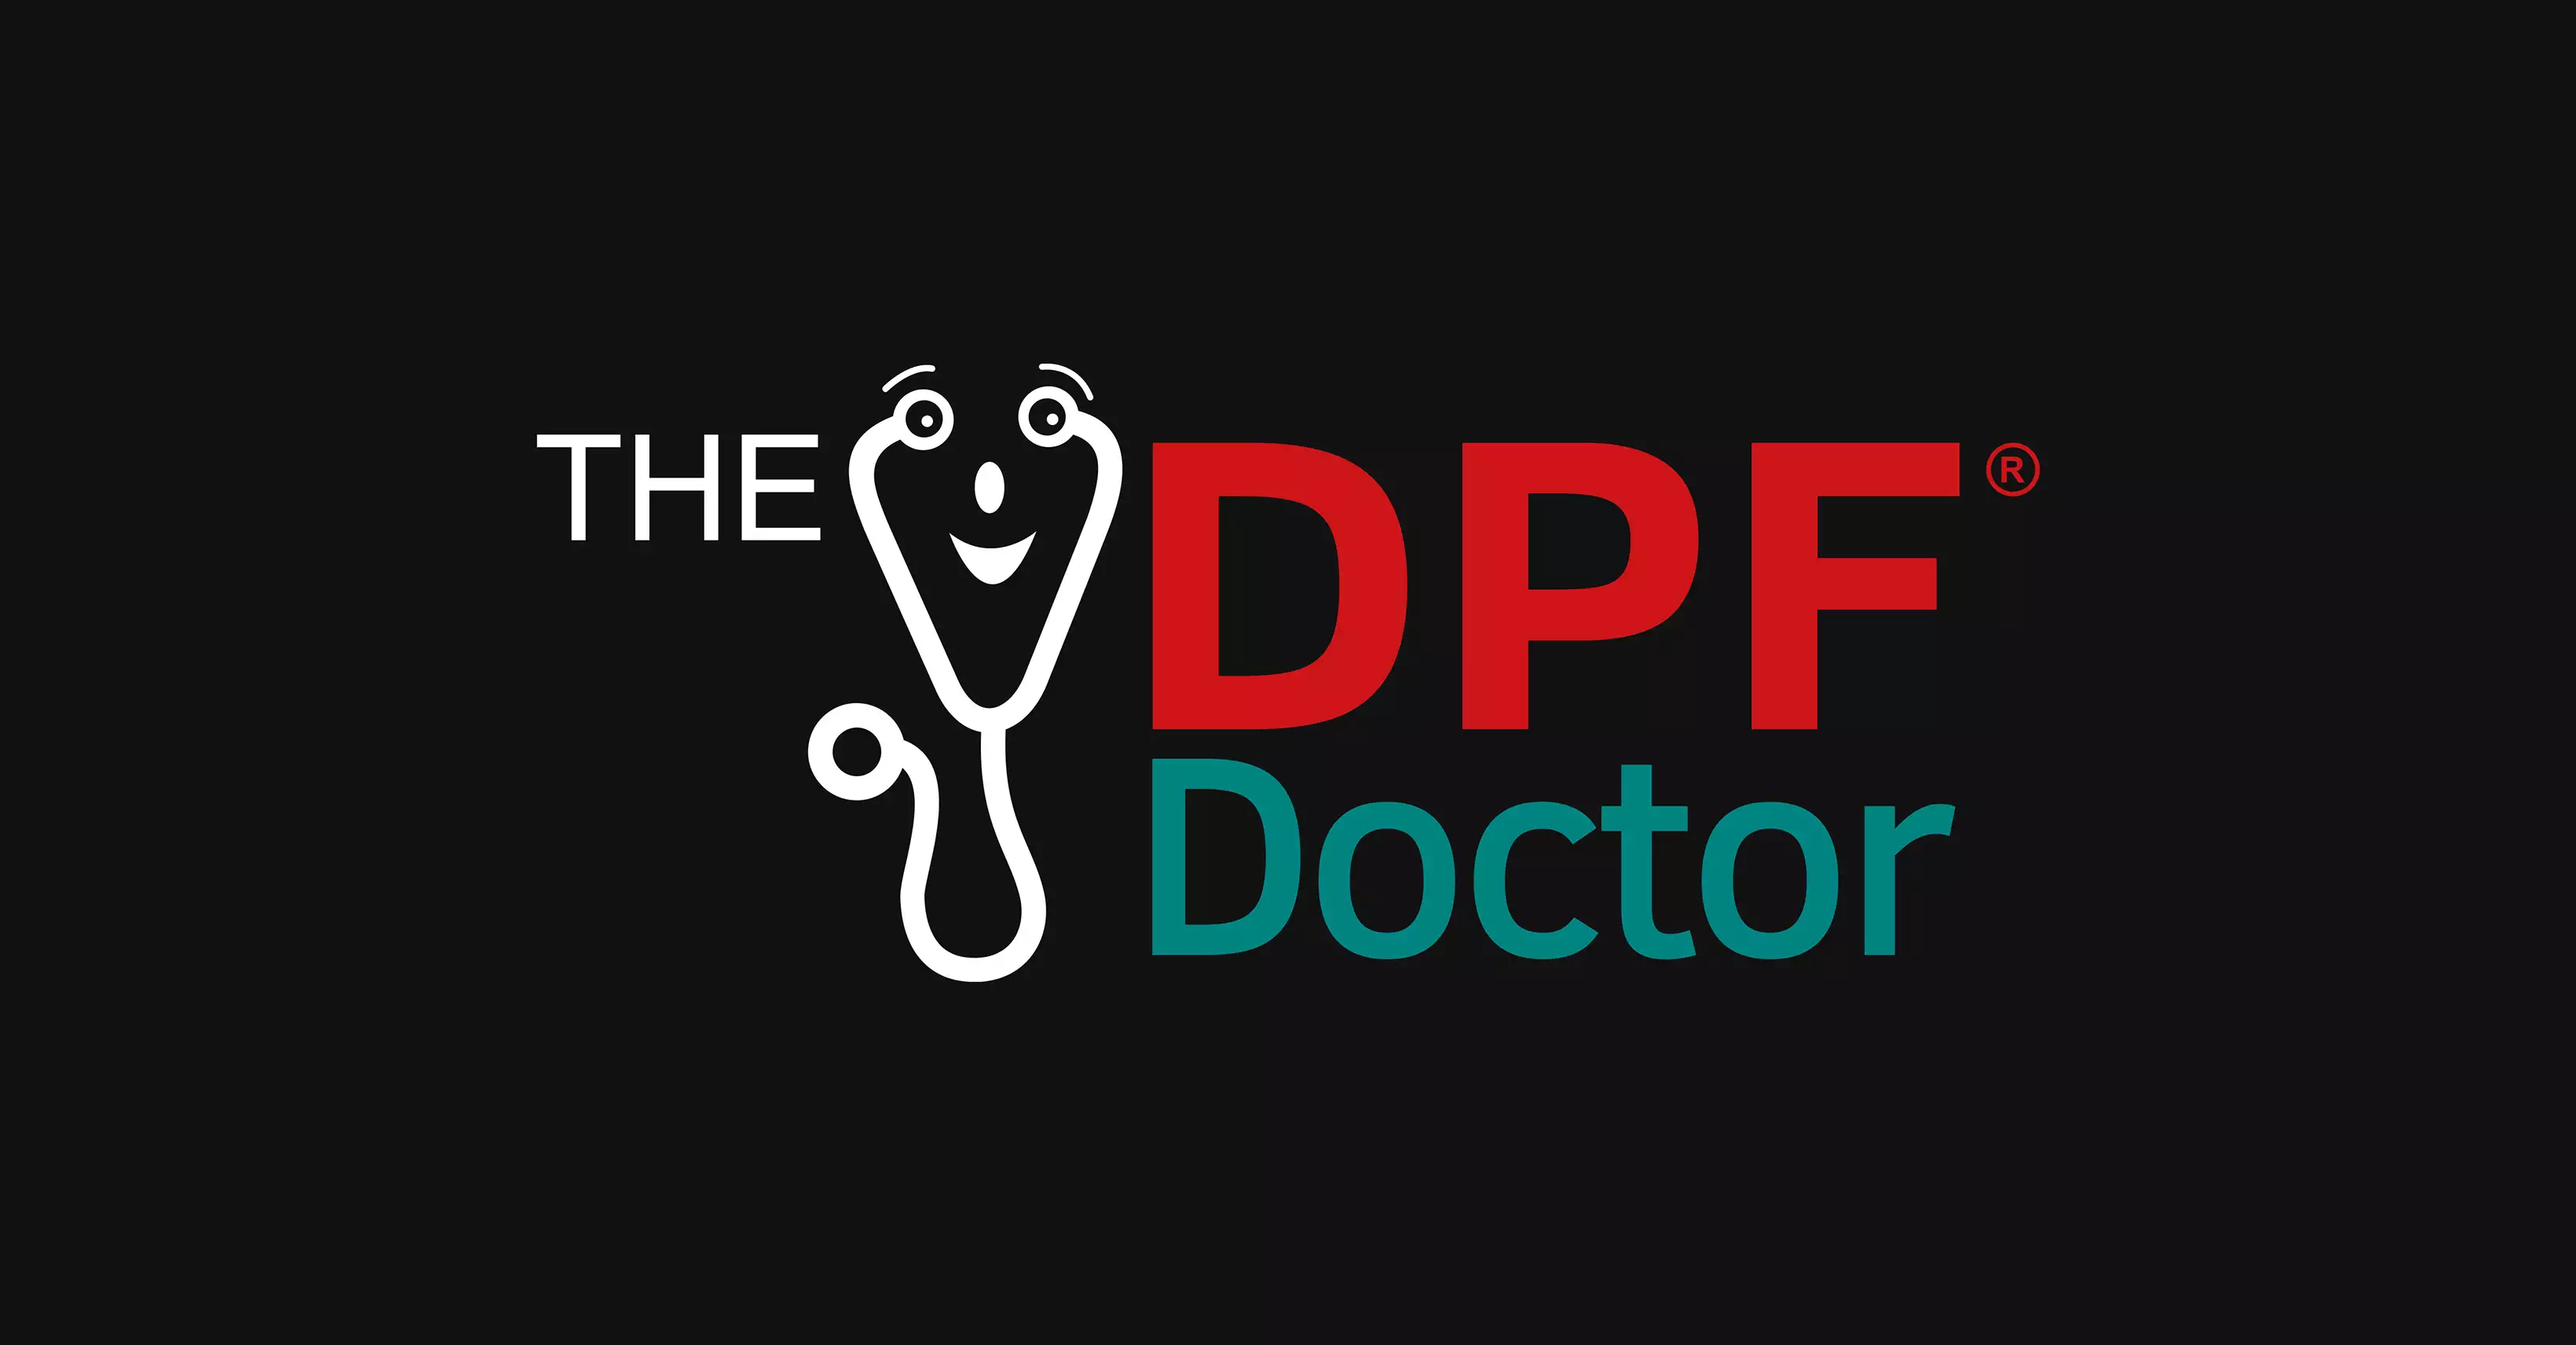 Logo Design The DPF Doctor